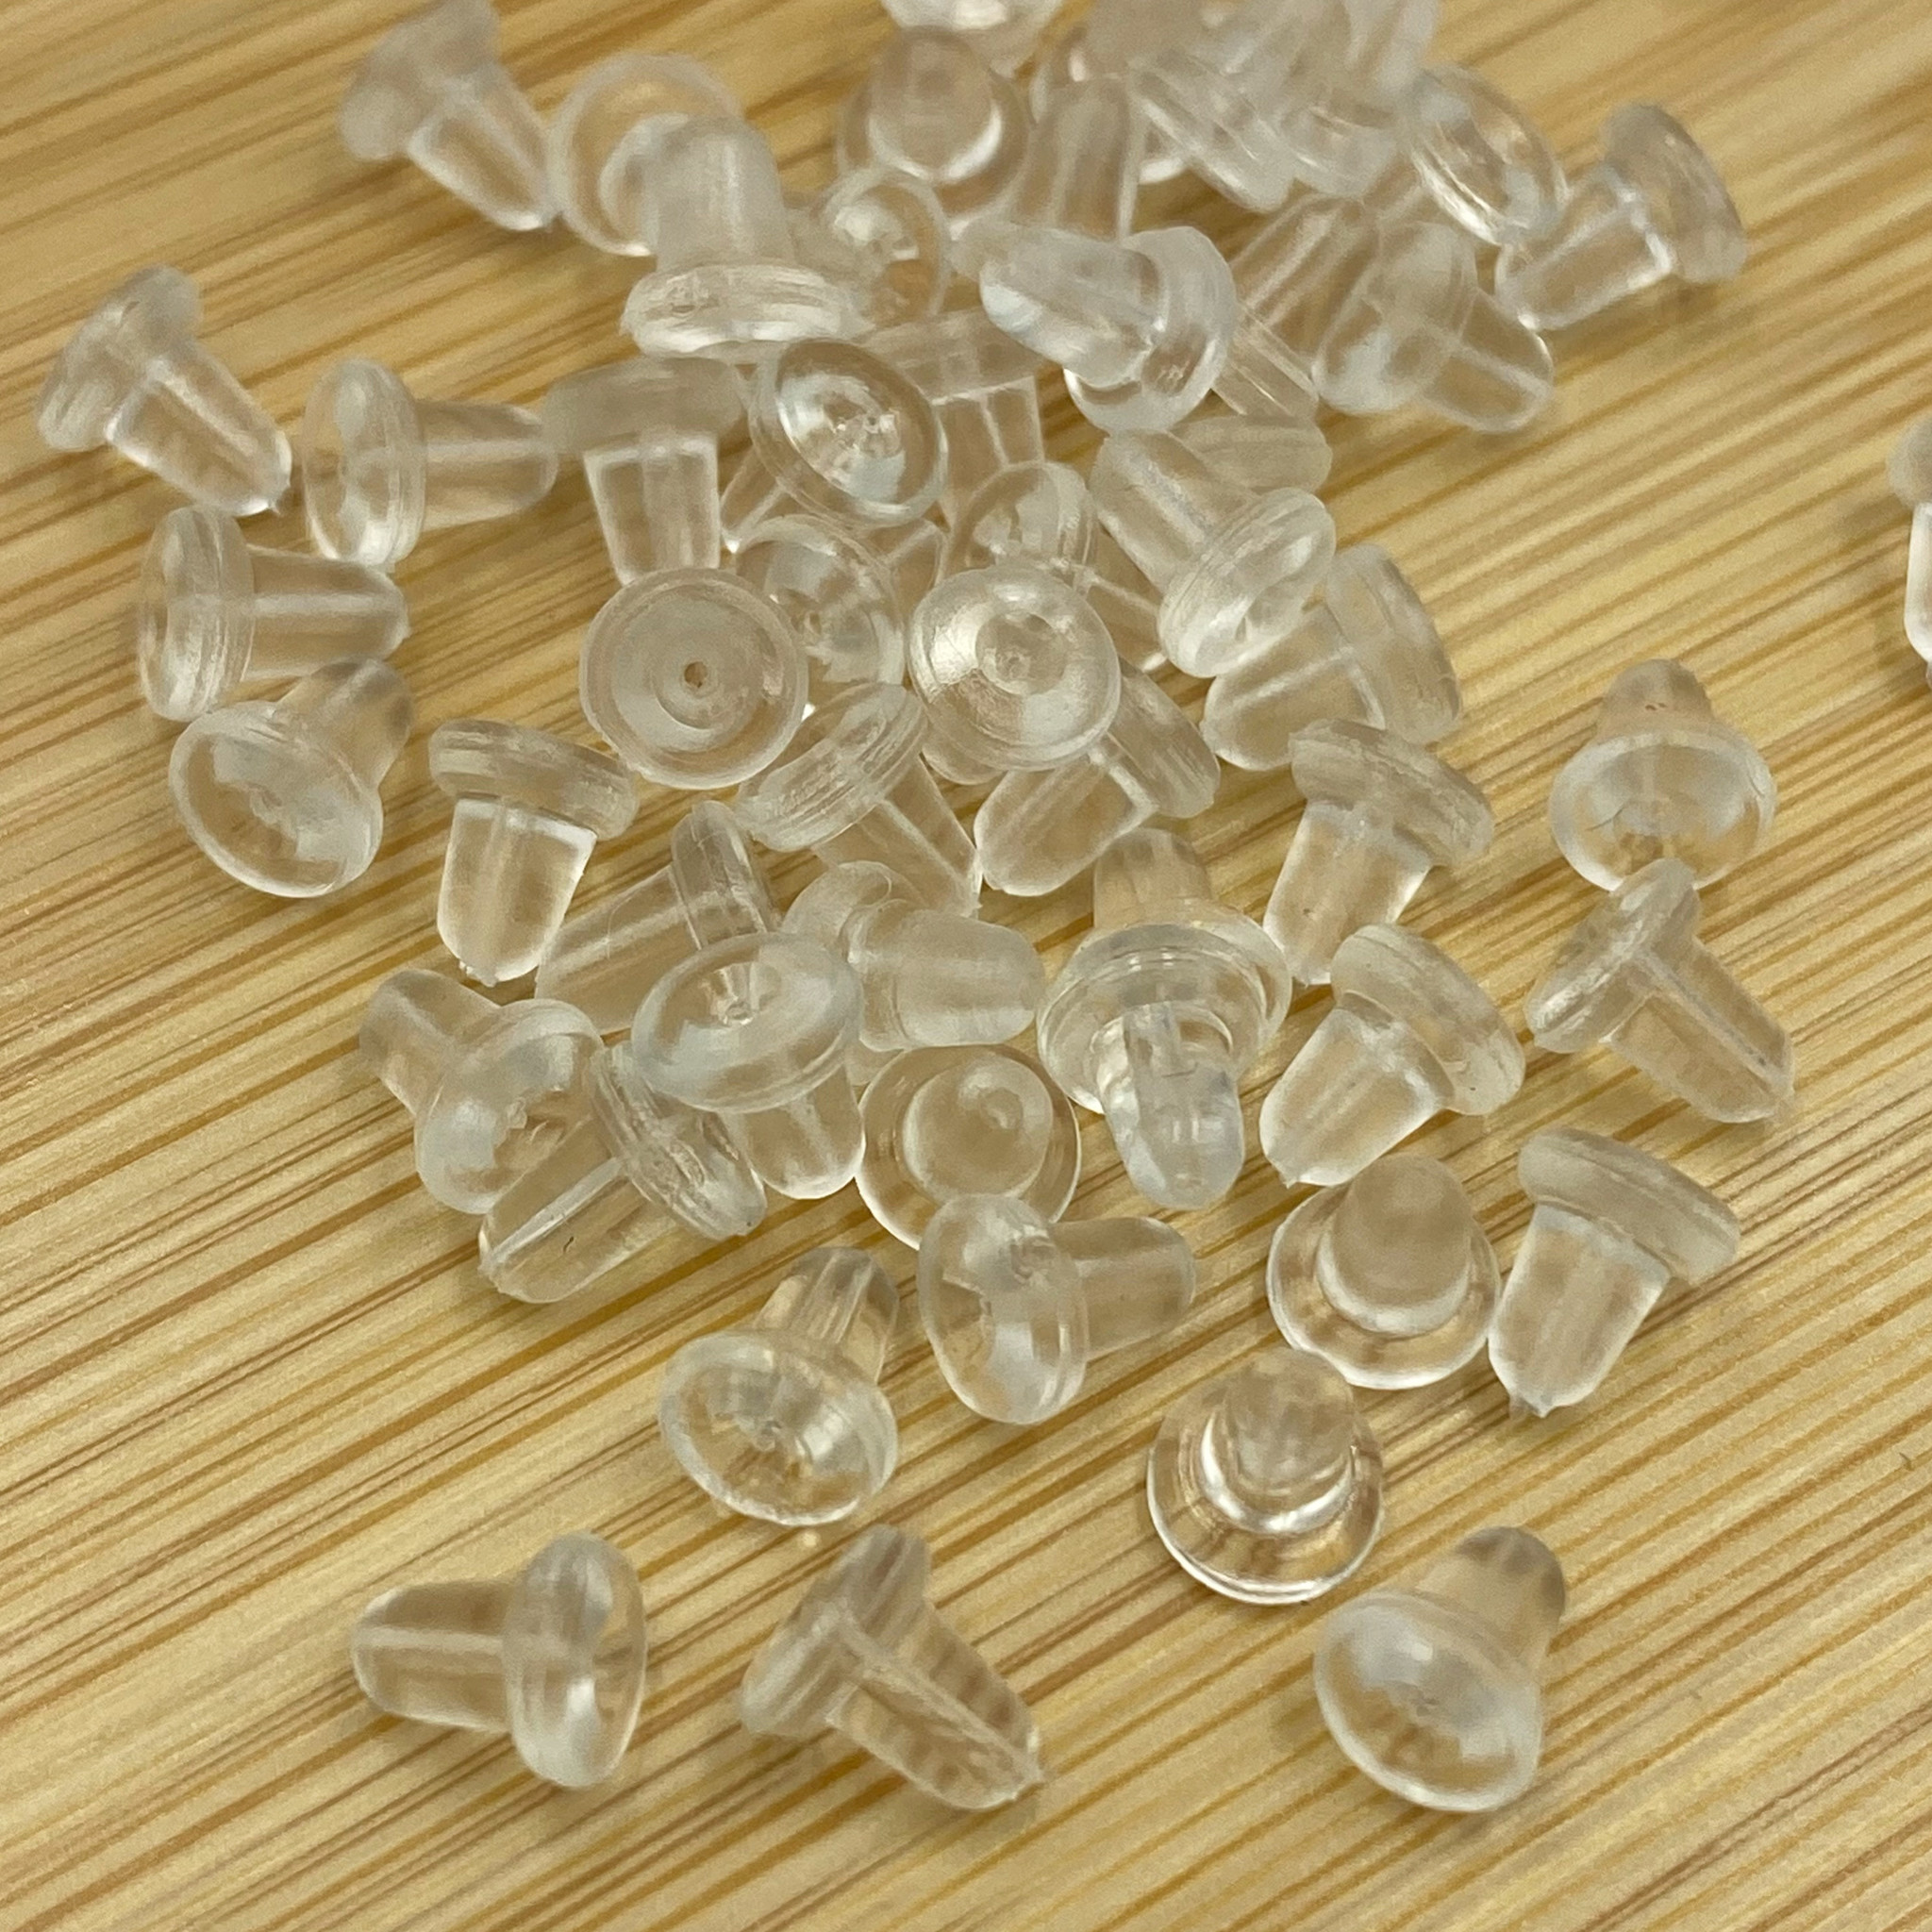 Bead Landing™ Plain Plastic Clear Earring Back